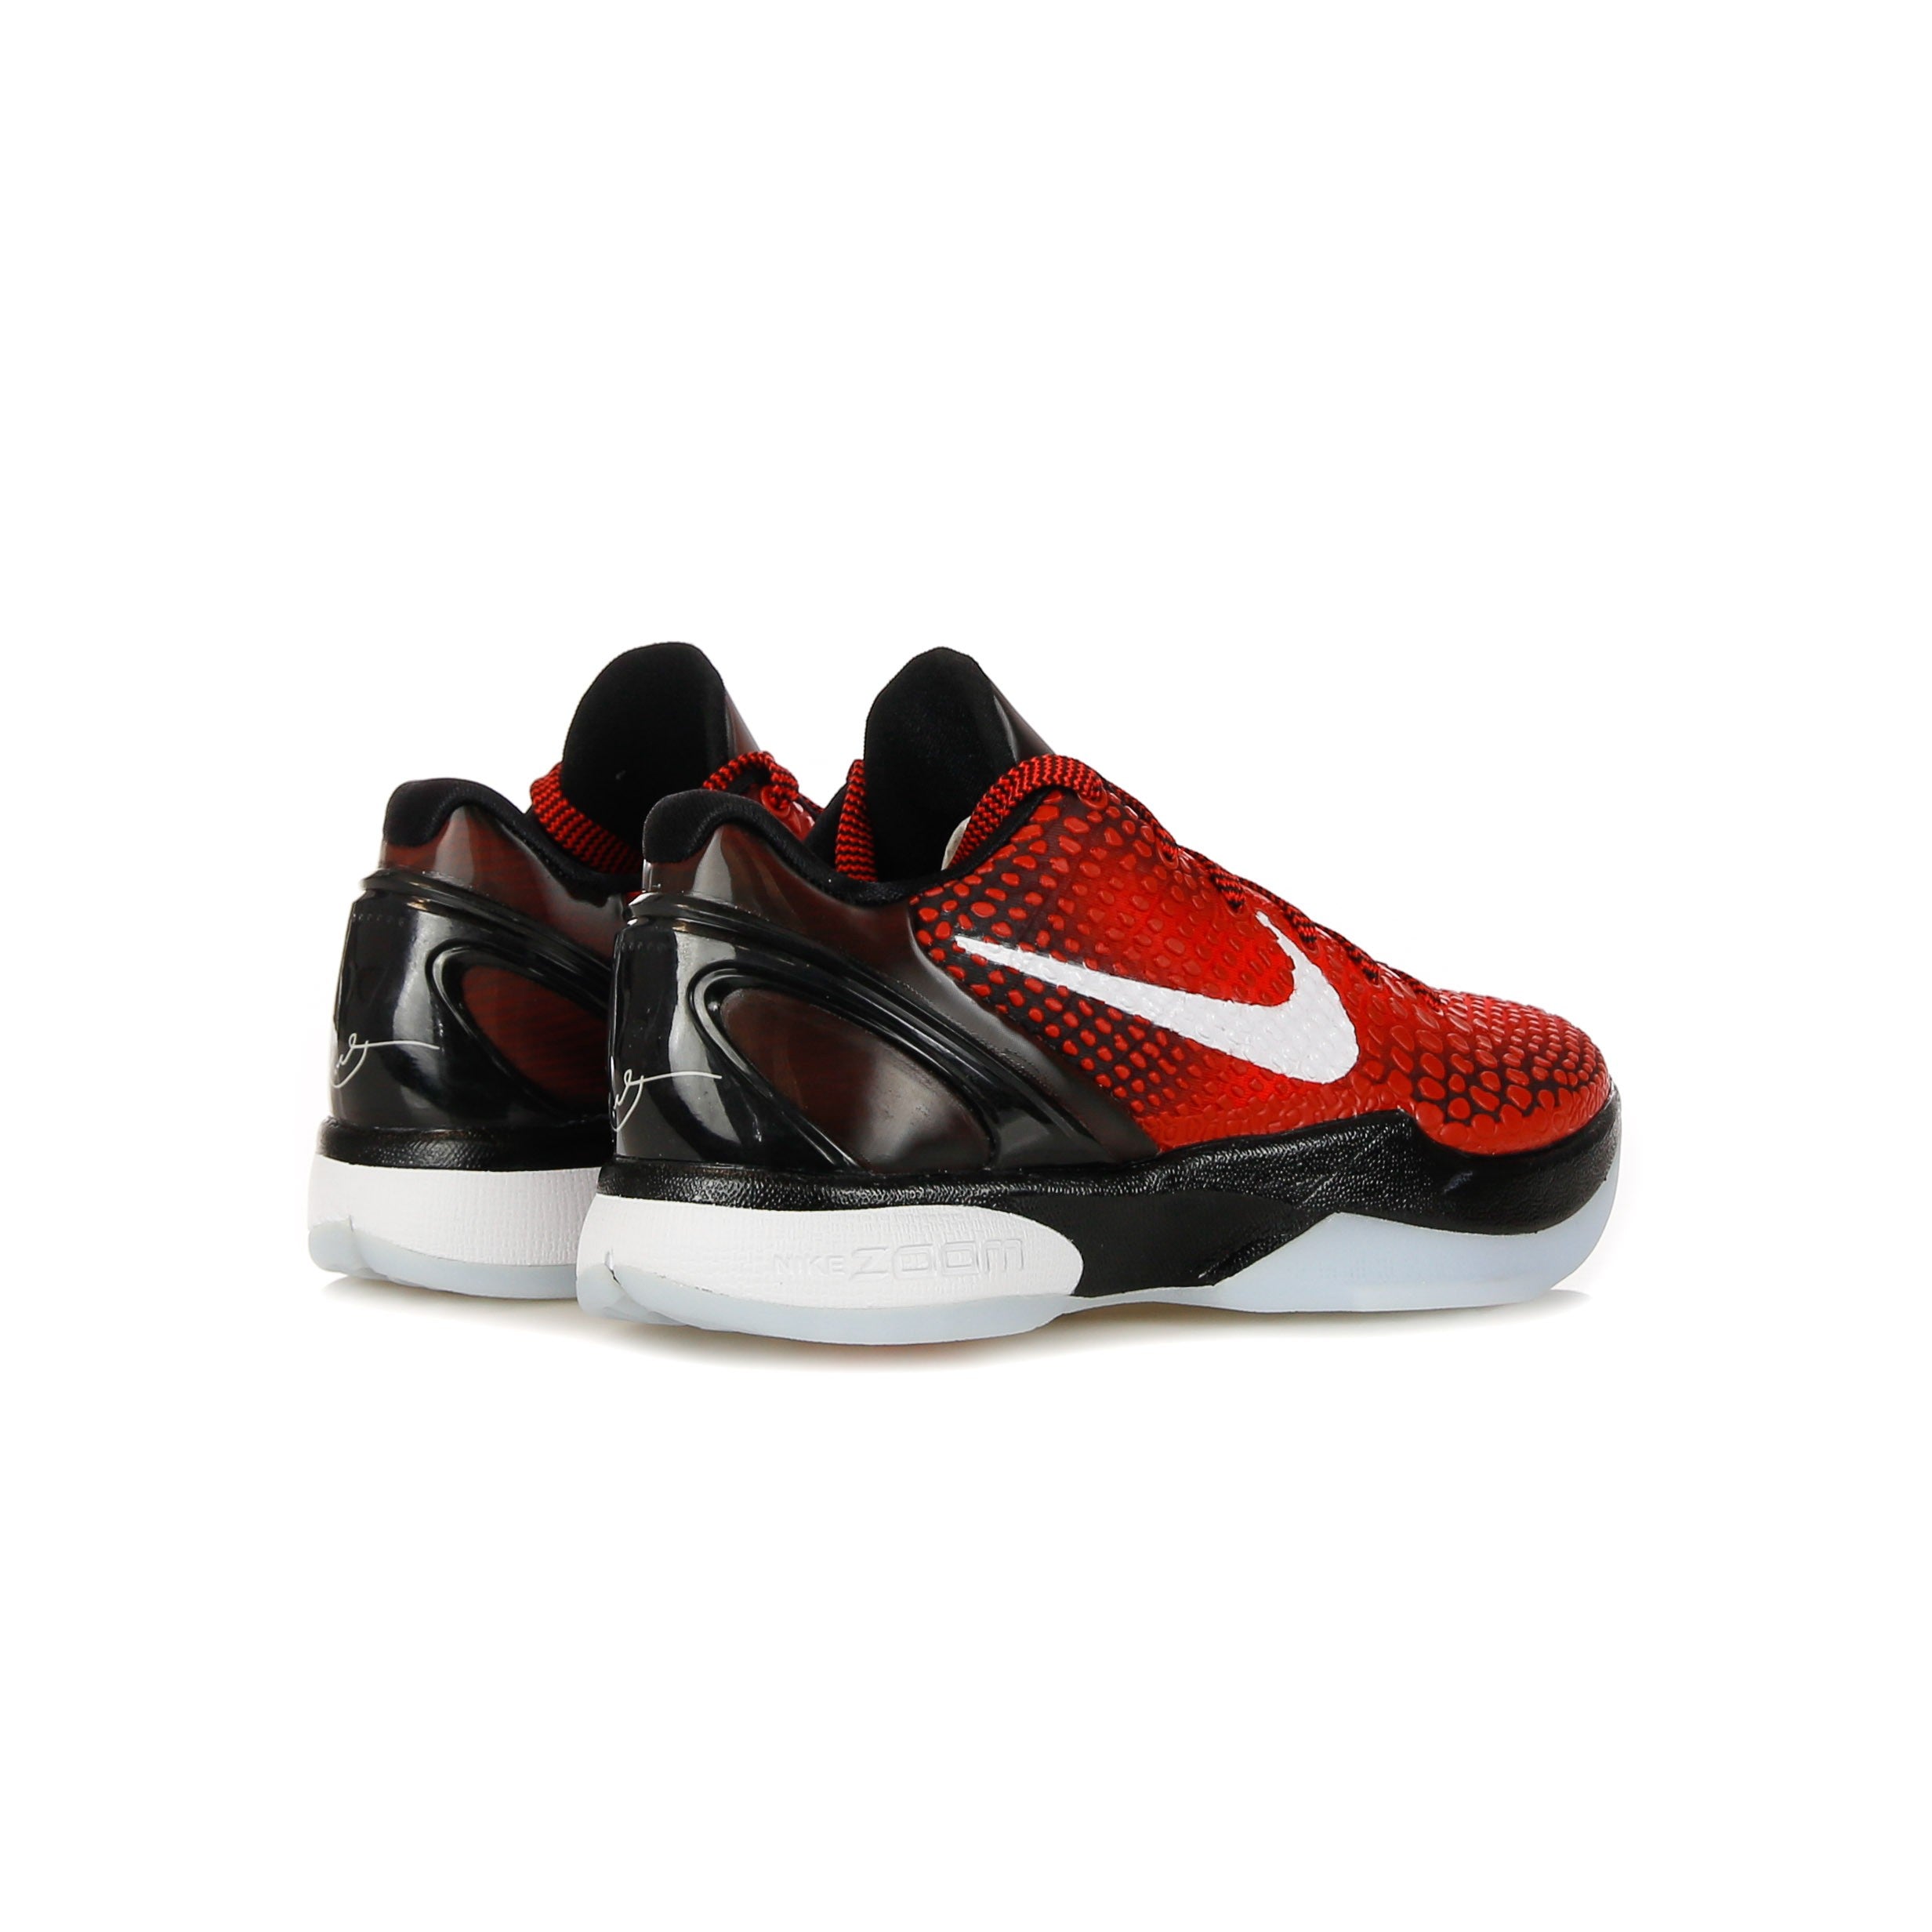 Kobe Vi Protro Challenge Men's Basketball Shoe Red/white/black